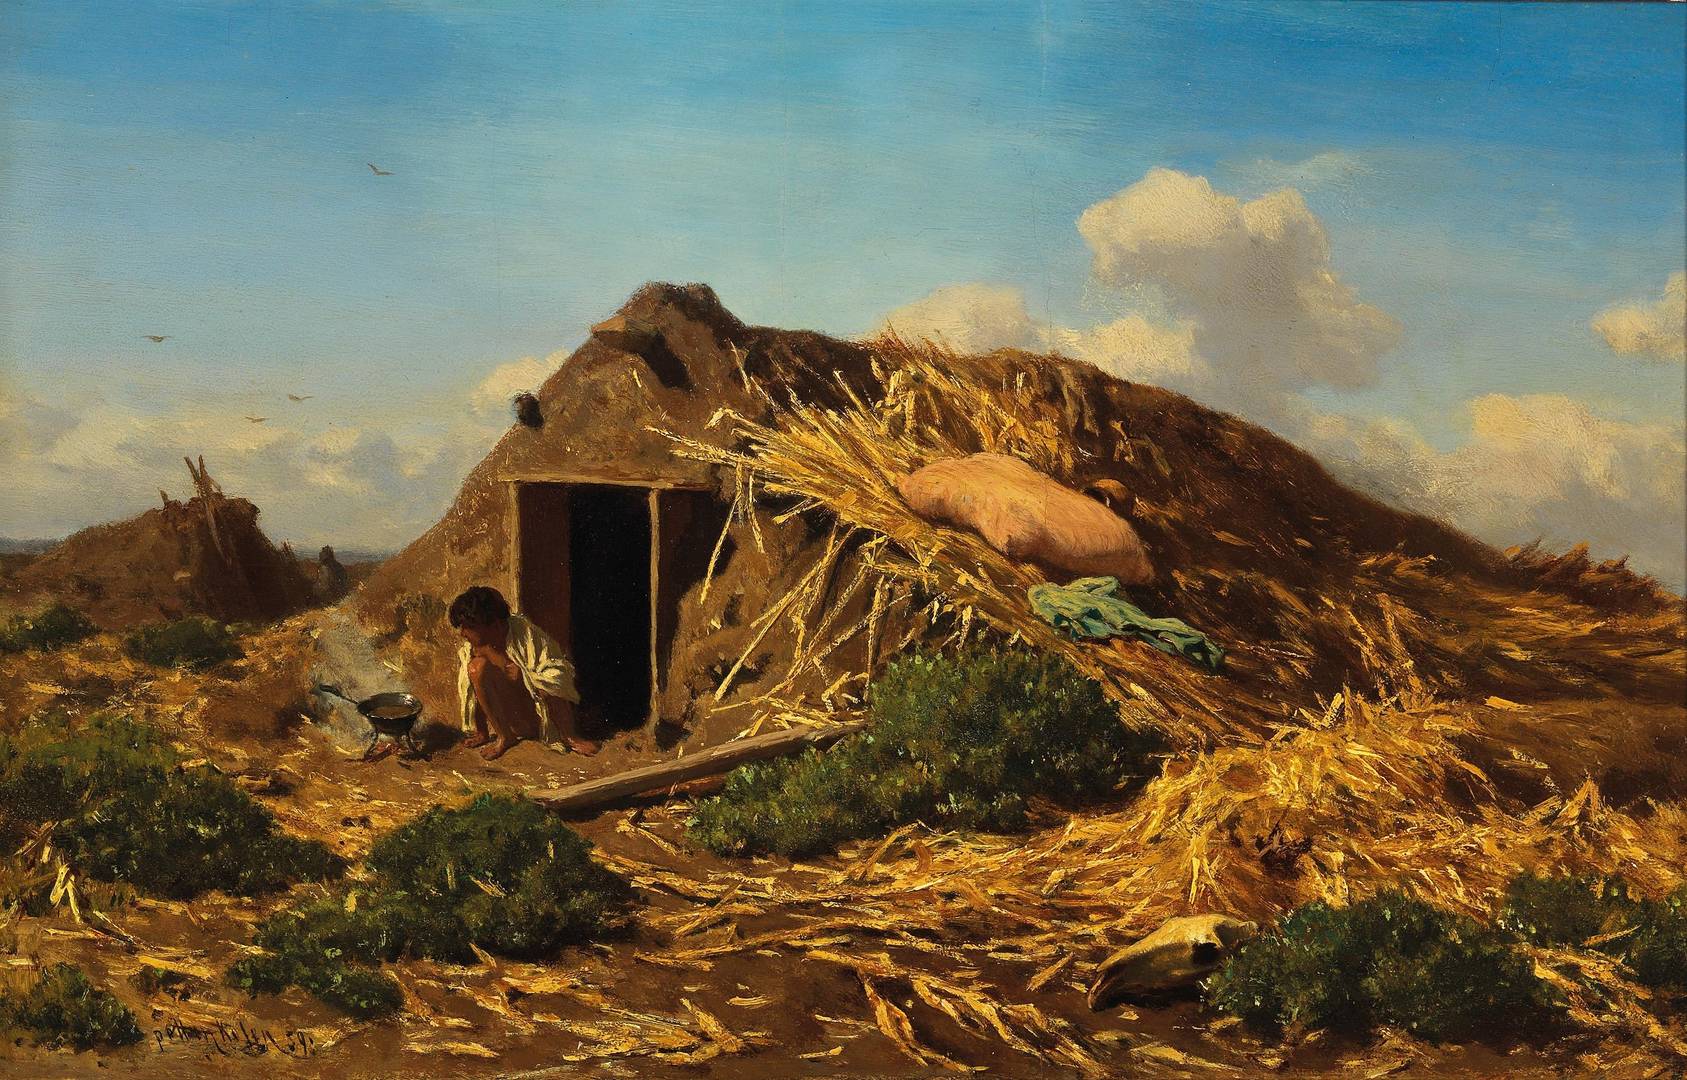 Август фон Петтенкофен. Цыганский мальчик у лачуги. 1859